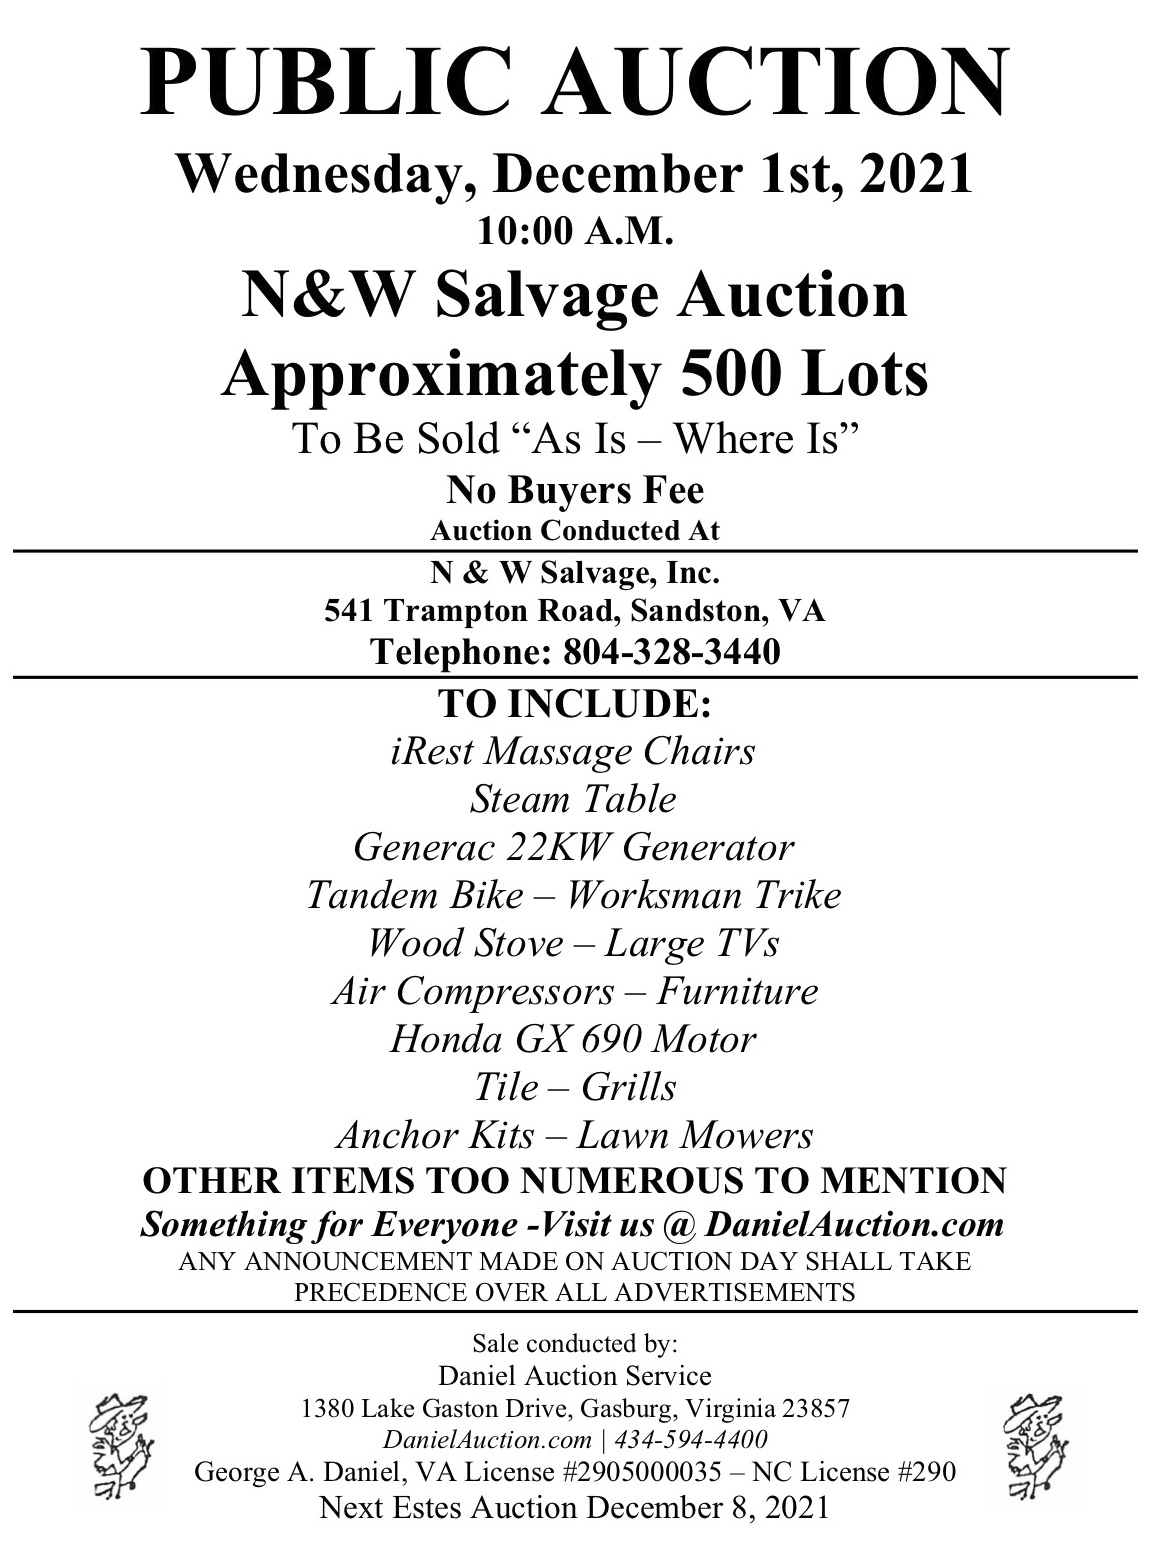 N&W Auction Handbill 12.1.21